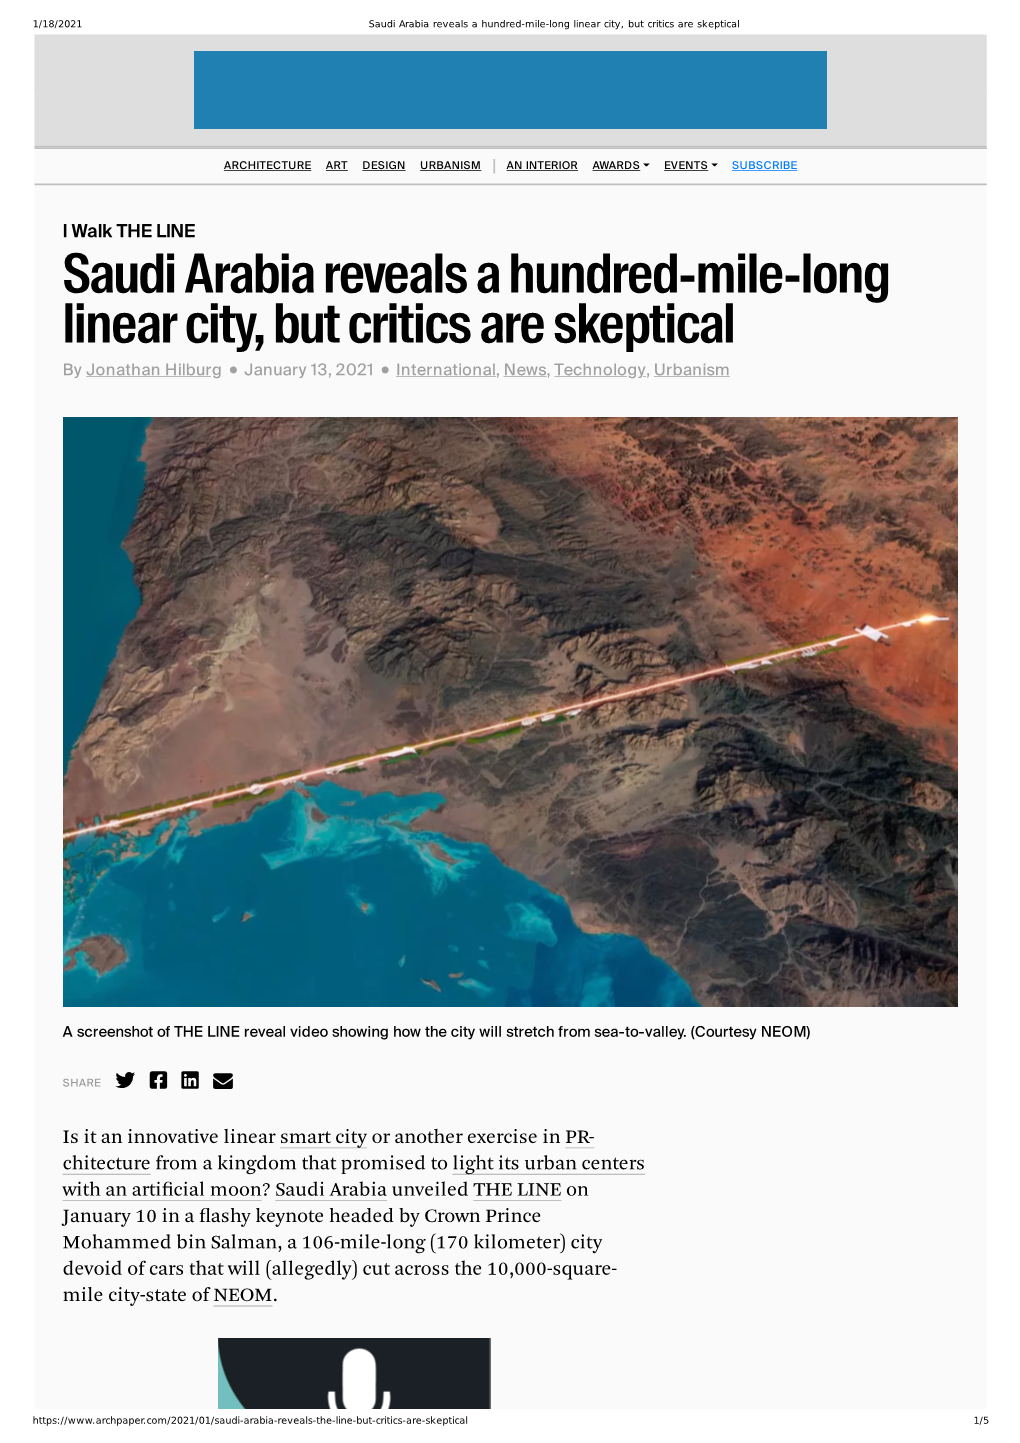 Saudi Arabia Reveals a Hundred-Mile-Long Linear City, but Critics Are Skeptical